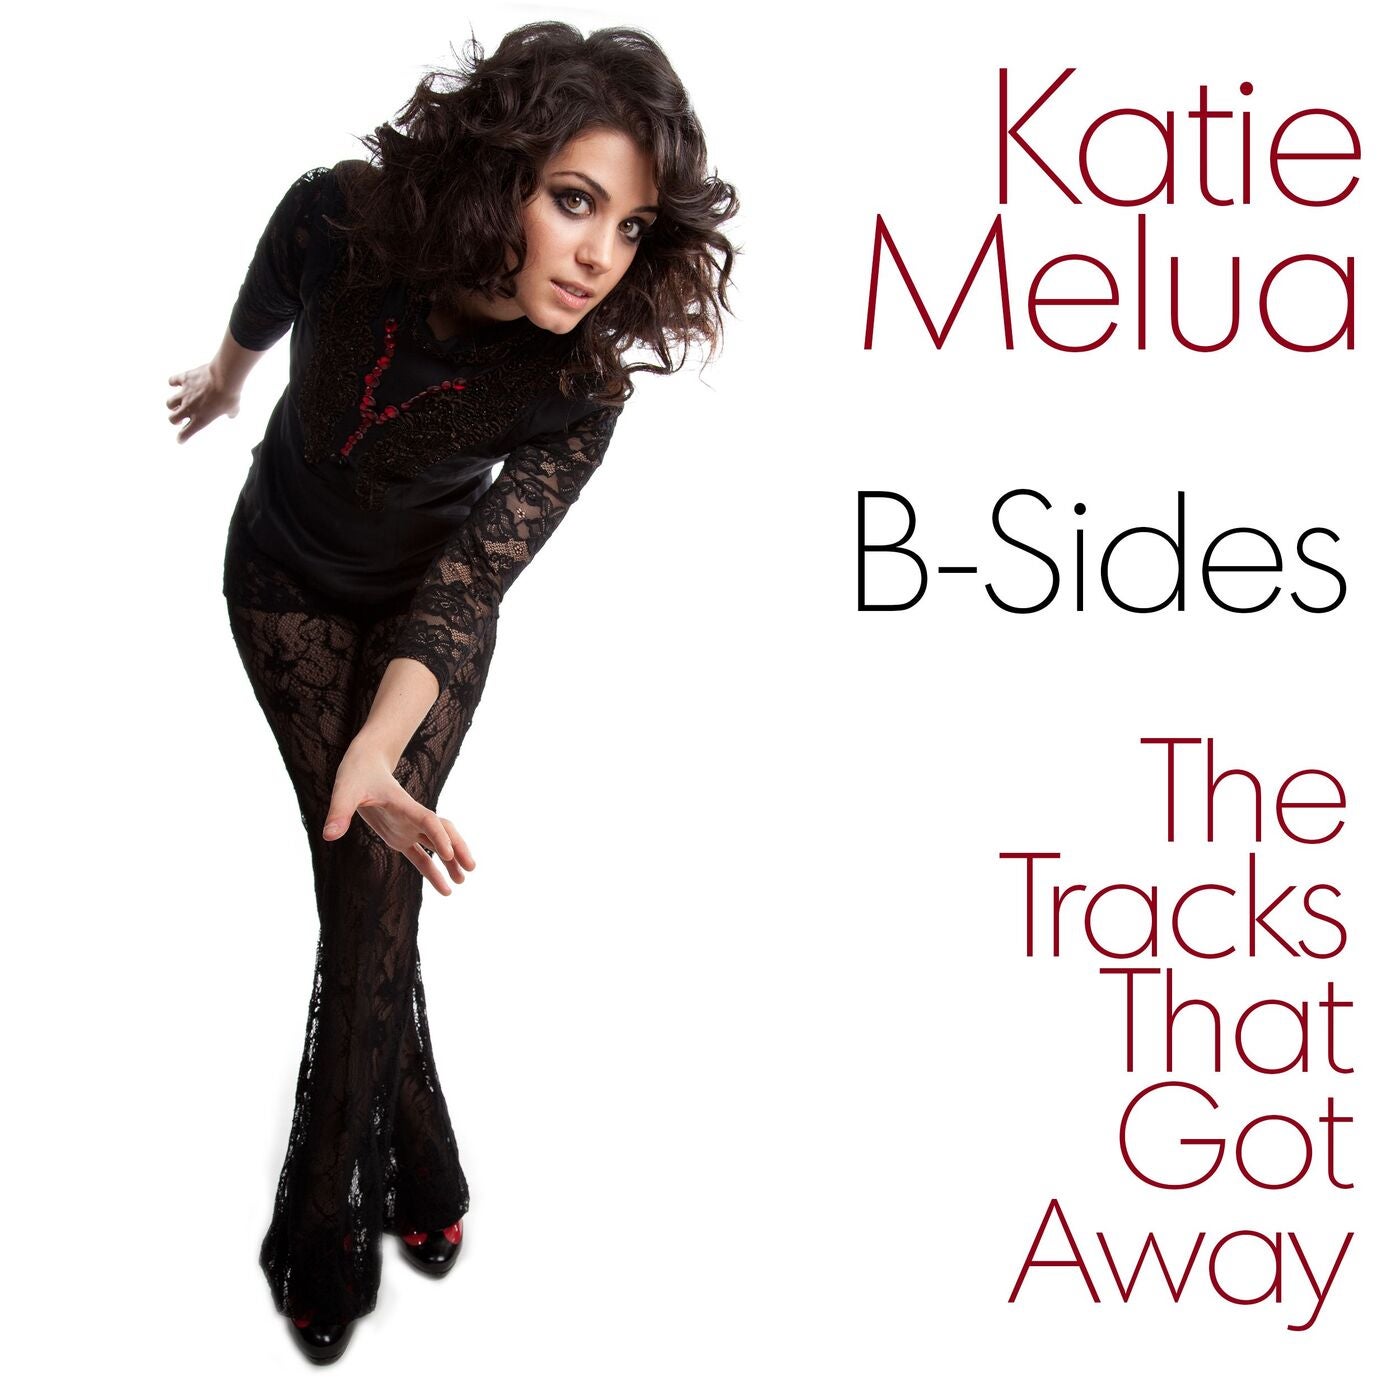 Wonderful life melua. Katie Melua. Ultimate collection Кэти Мелуа. Katie Melua - wonderful Life обложка альбома. Katie Melua pictures.